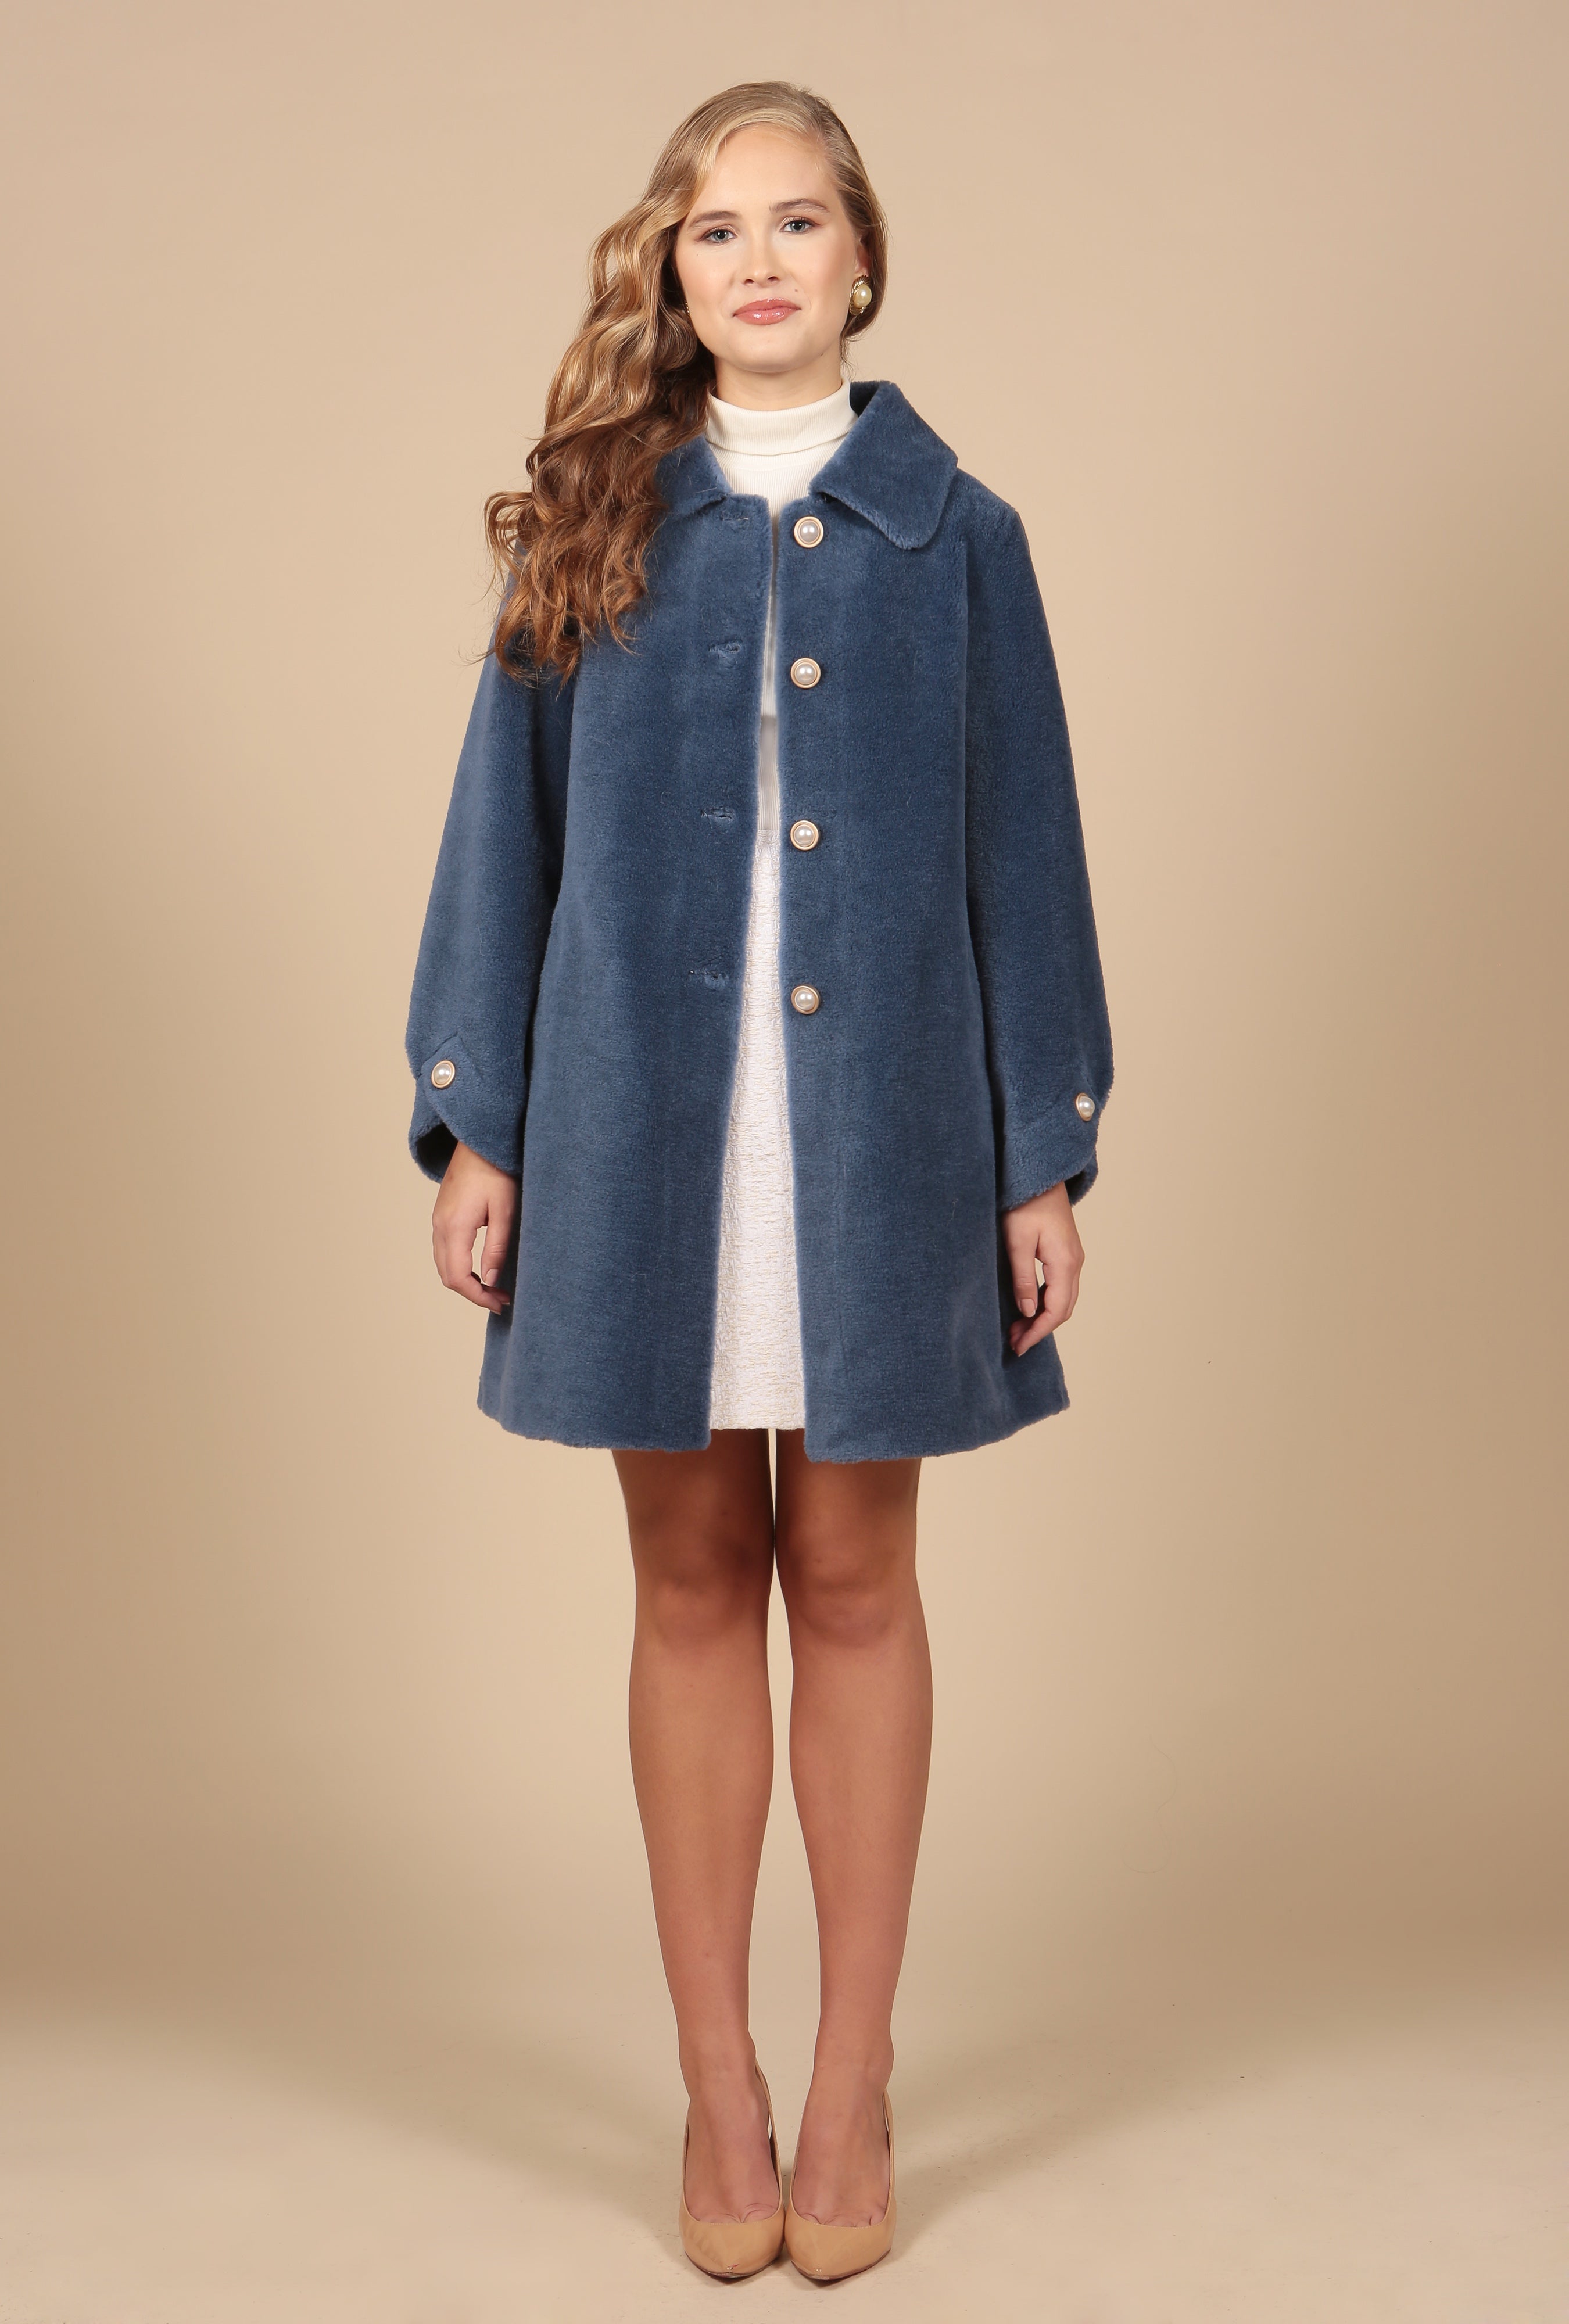 'Amore' Wool Coat in Marino